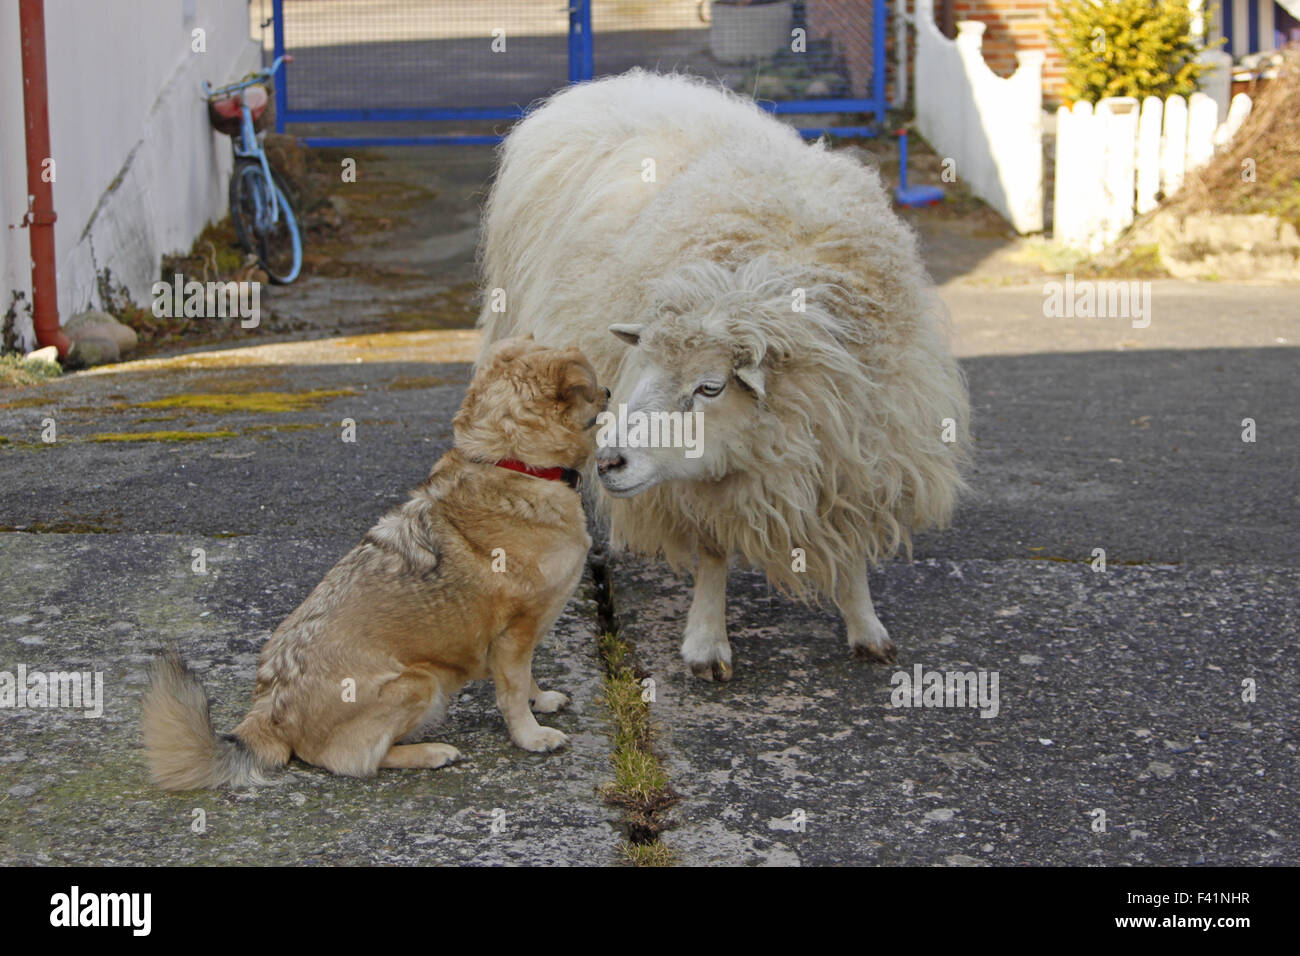 dog and sheep Stock Photo